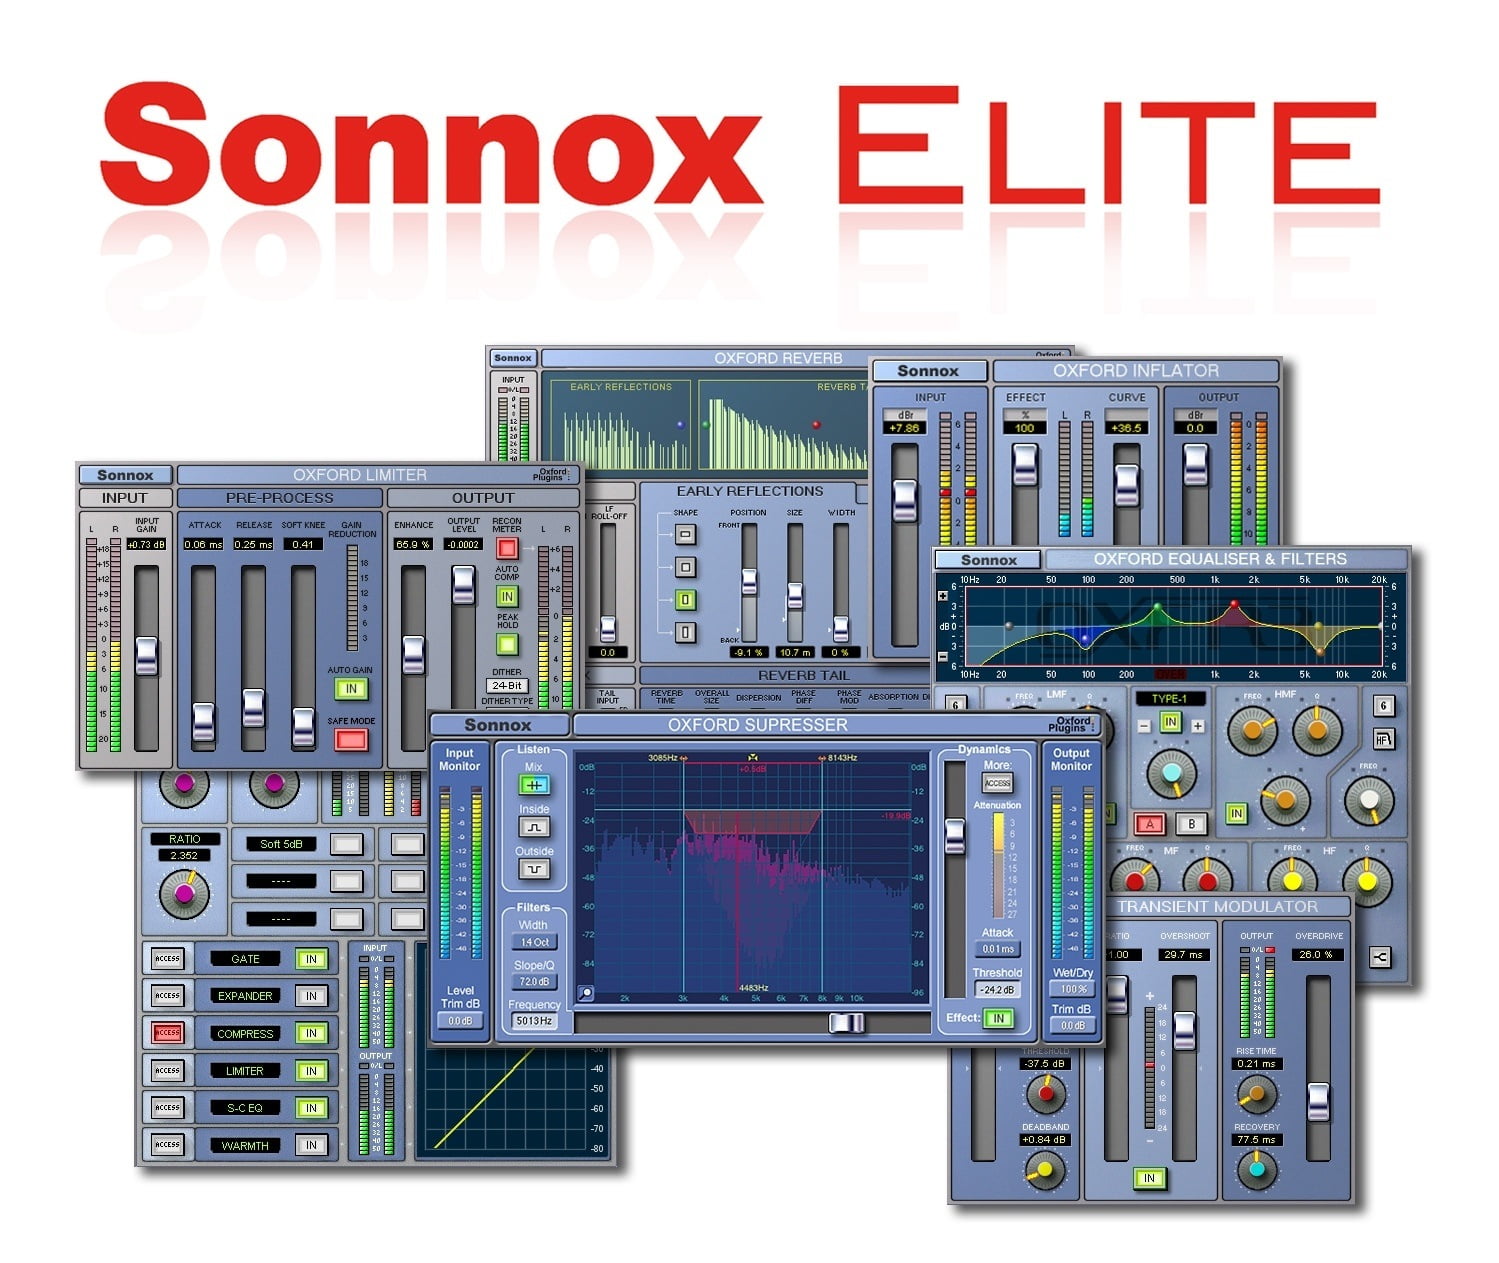 sonnox oxford bundle torrent